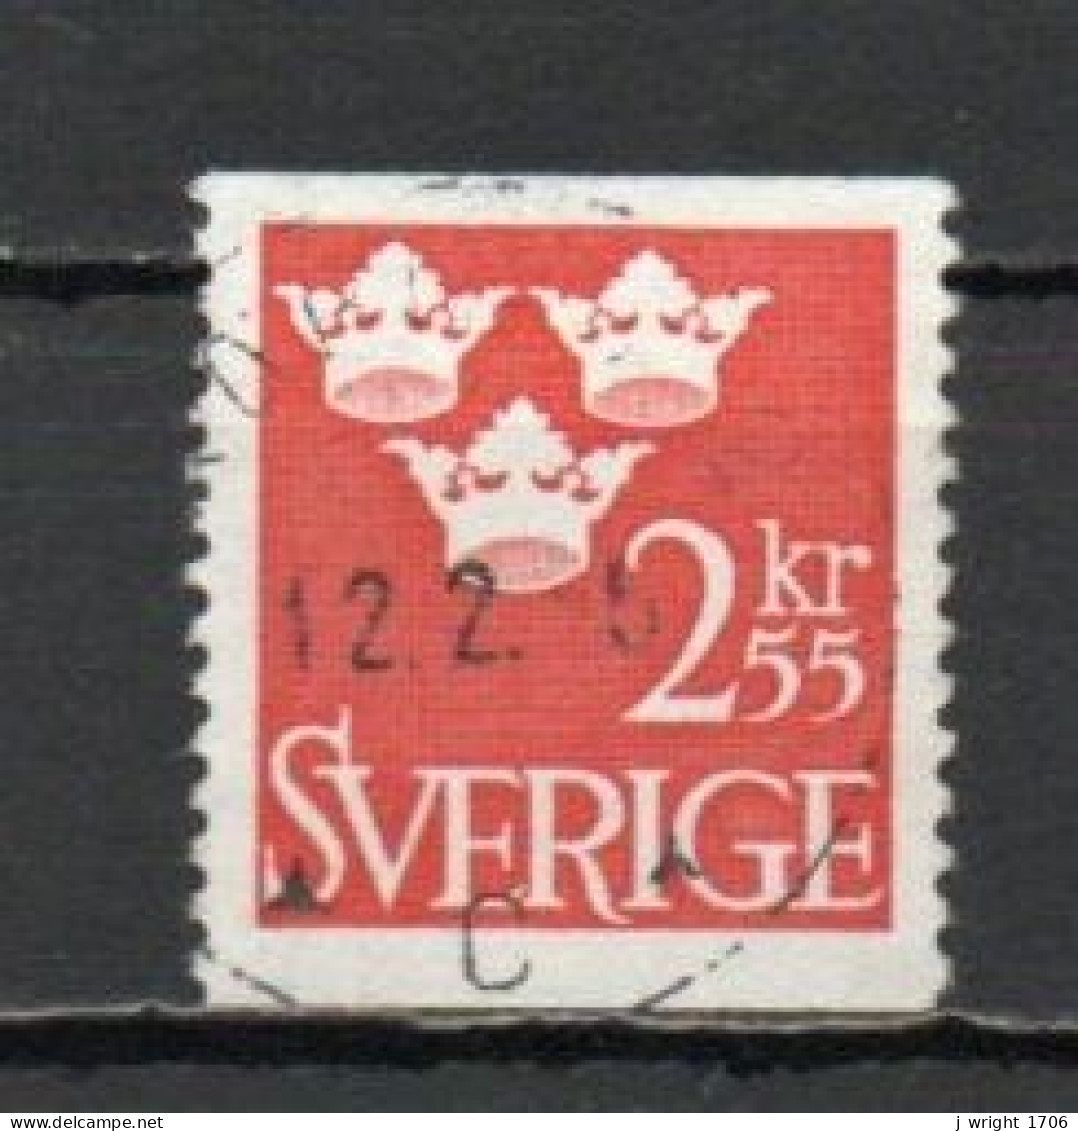 Sweden, 1964, Three Crowns, 2.55kr, USED - Oblitérés